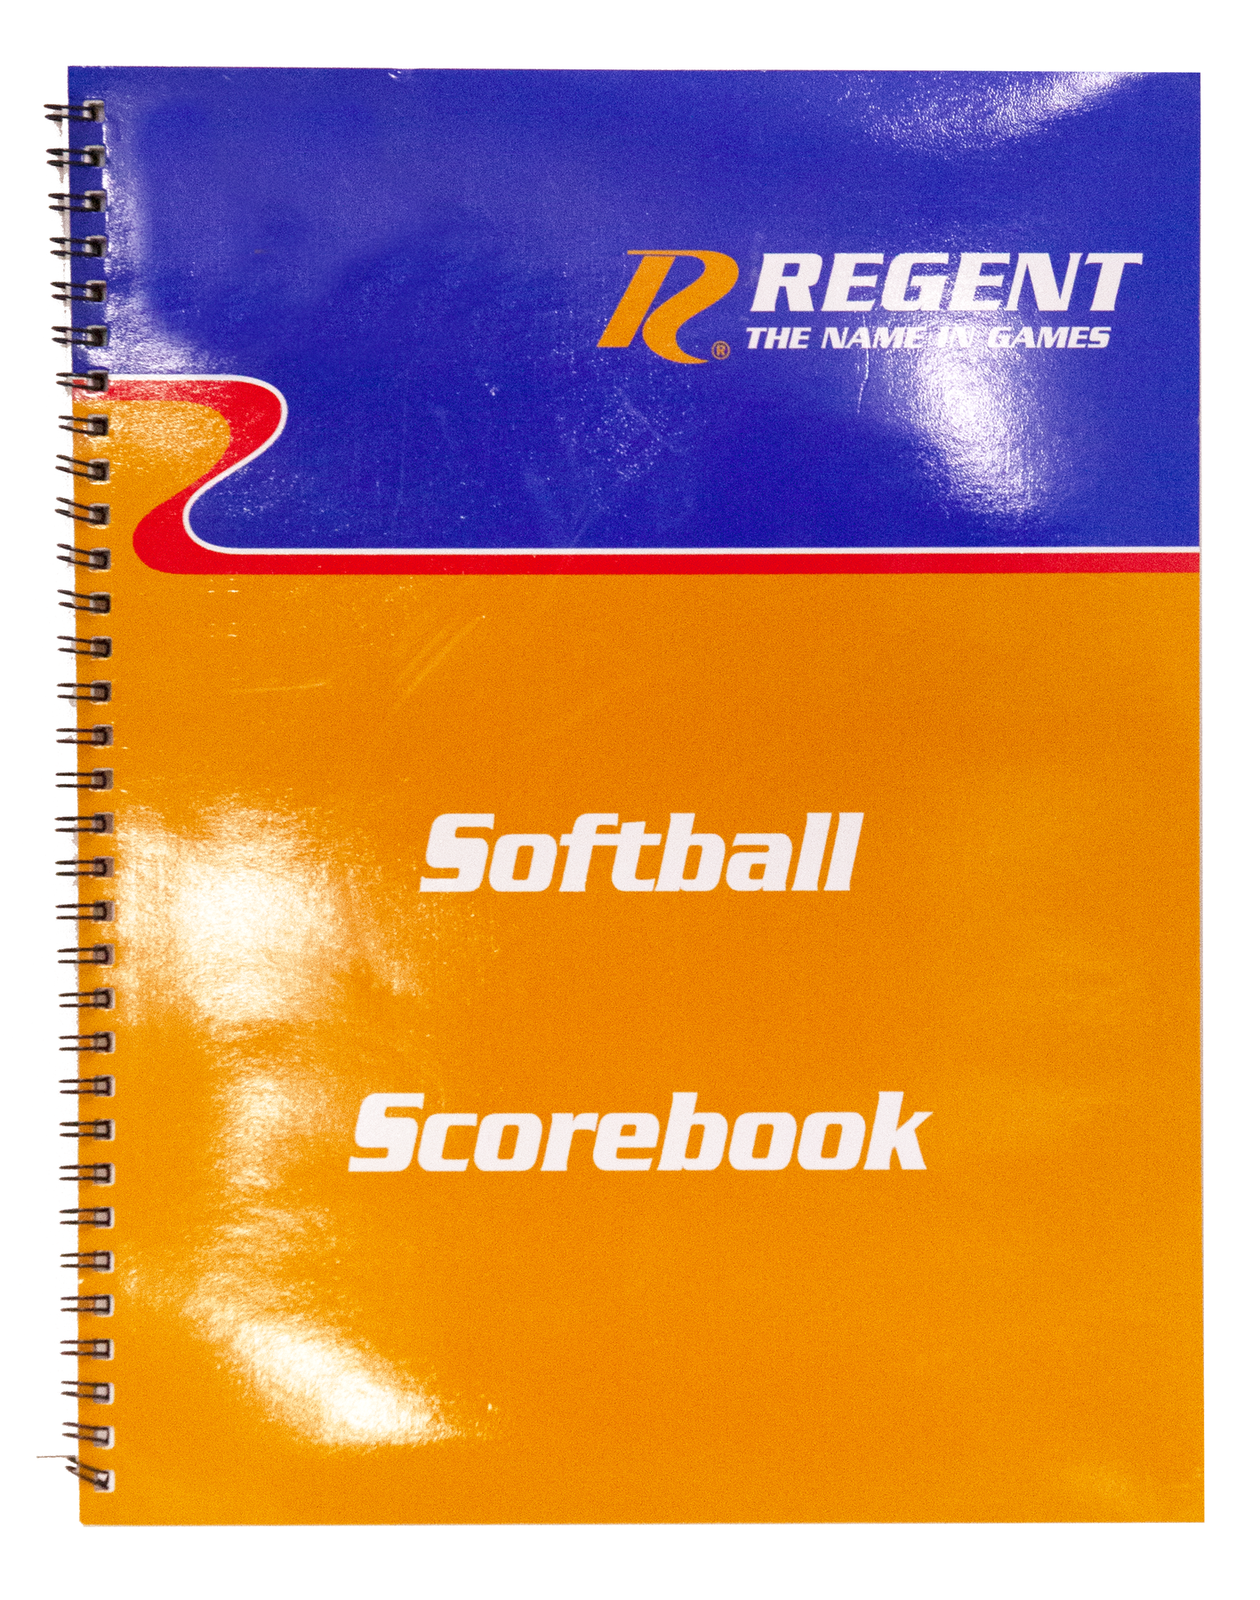 Regent Softball Scorebook